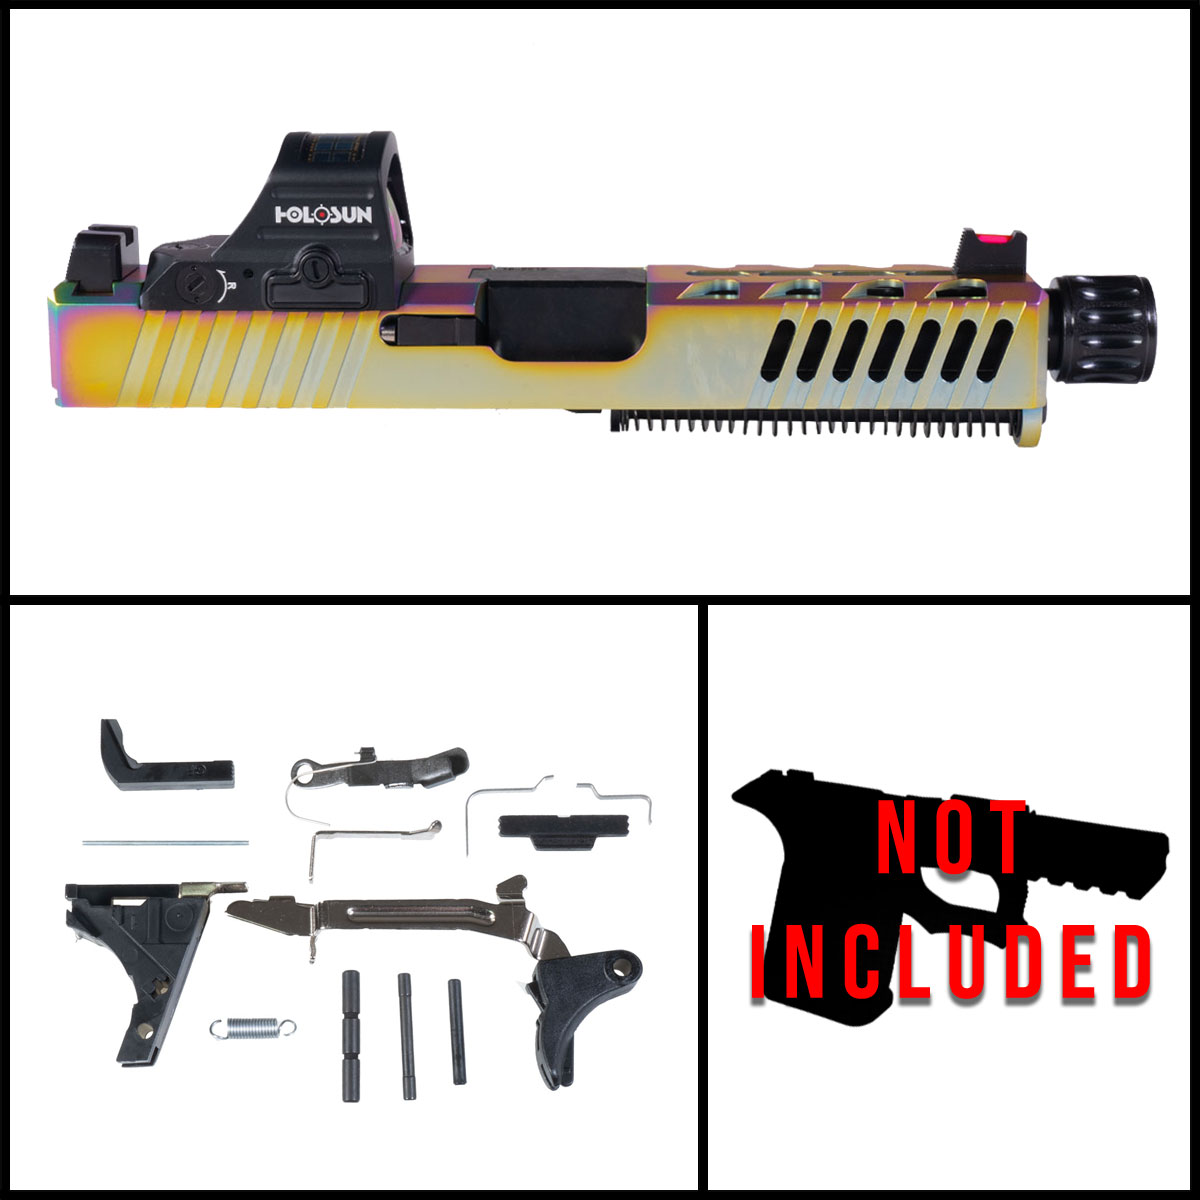 OTD 'Twilight Turbo w/ HS507C-X2' 9mm Full Pistol Build Kits (Everything Minus Frame) - Glock 19 Gen 1-2 Compatible